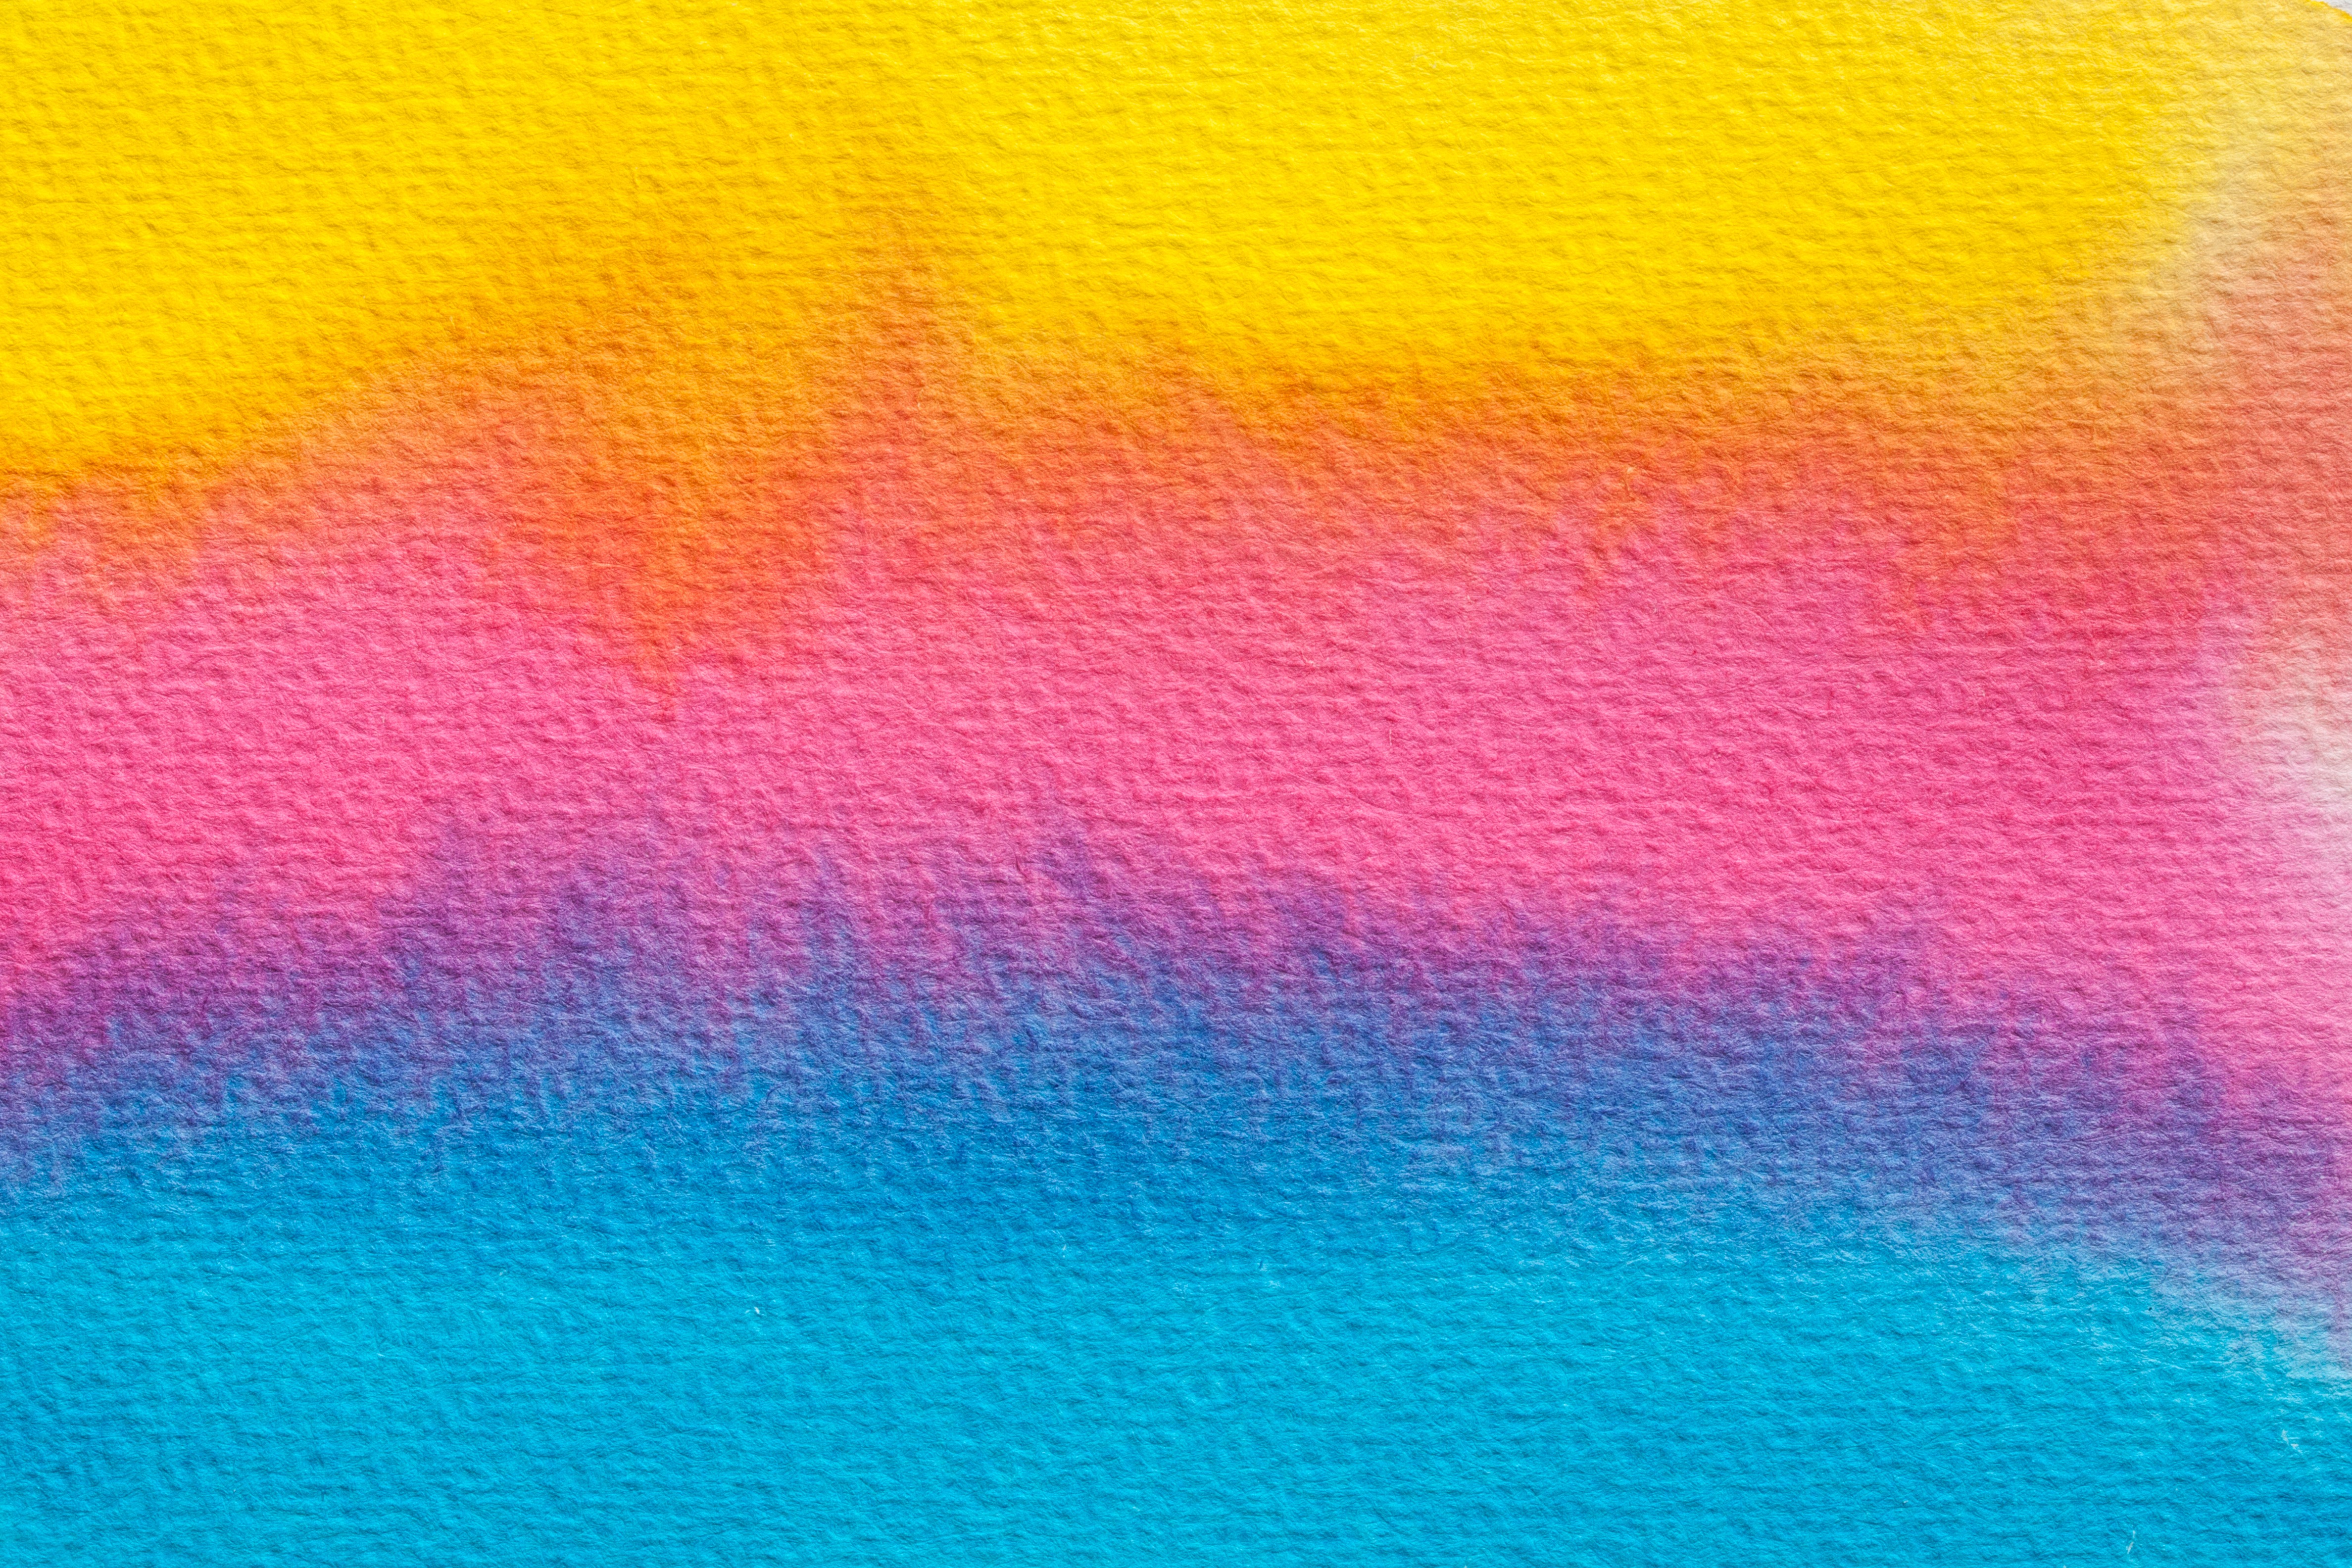 Colored Paper Texture image - Free stock photo - Public Domain photo